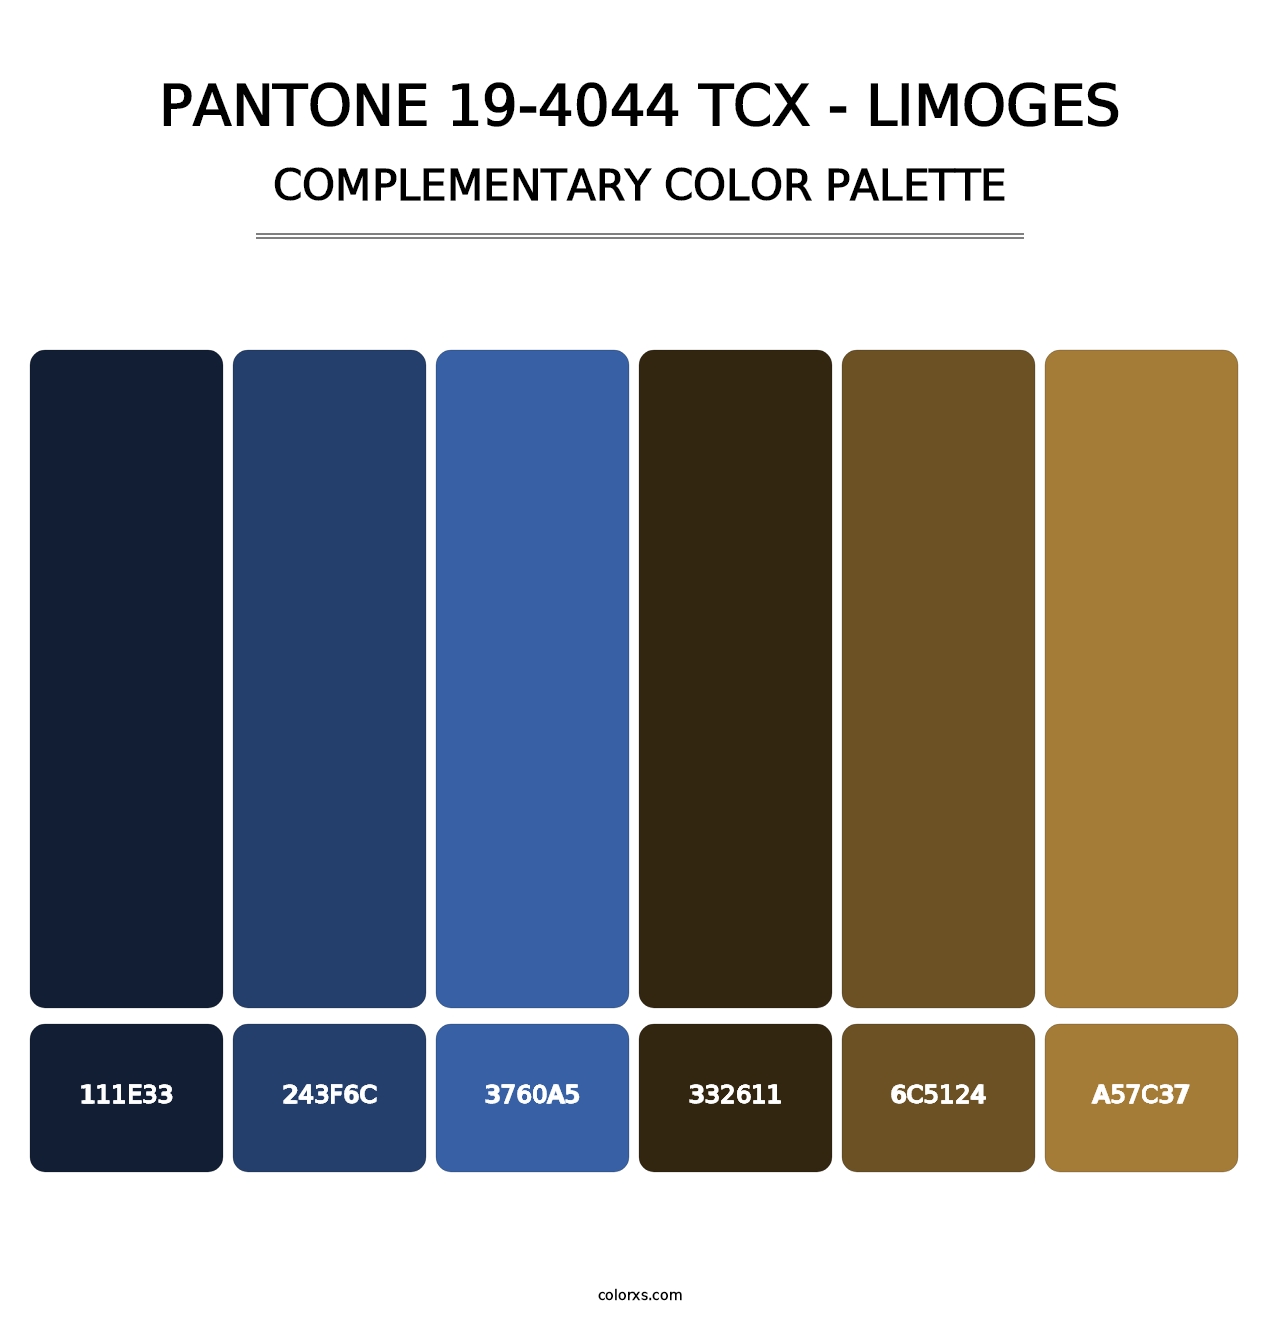 PANTONE 19-4044 TCX - Limoges - Complementary Color Palette